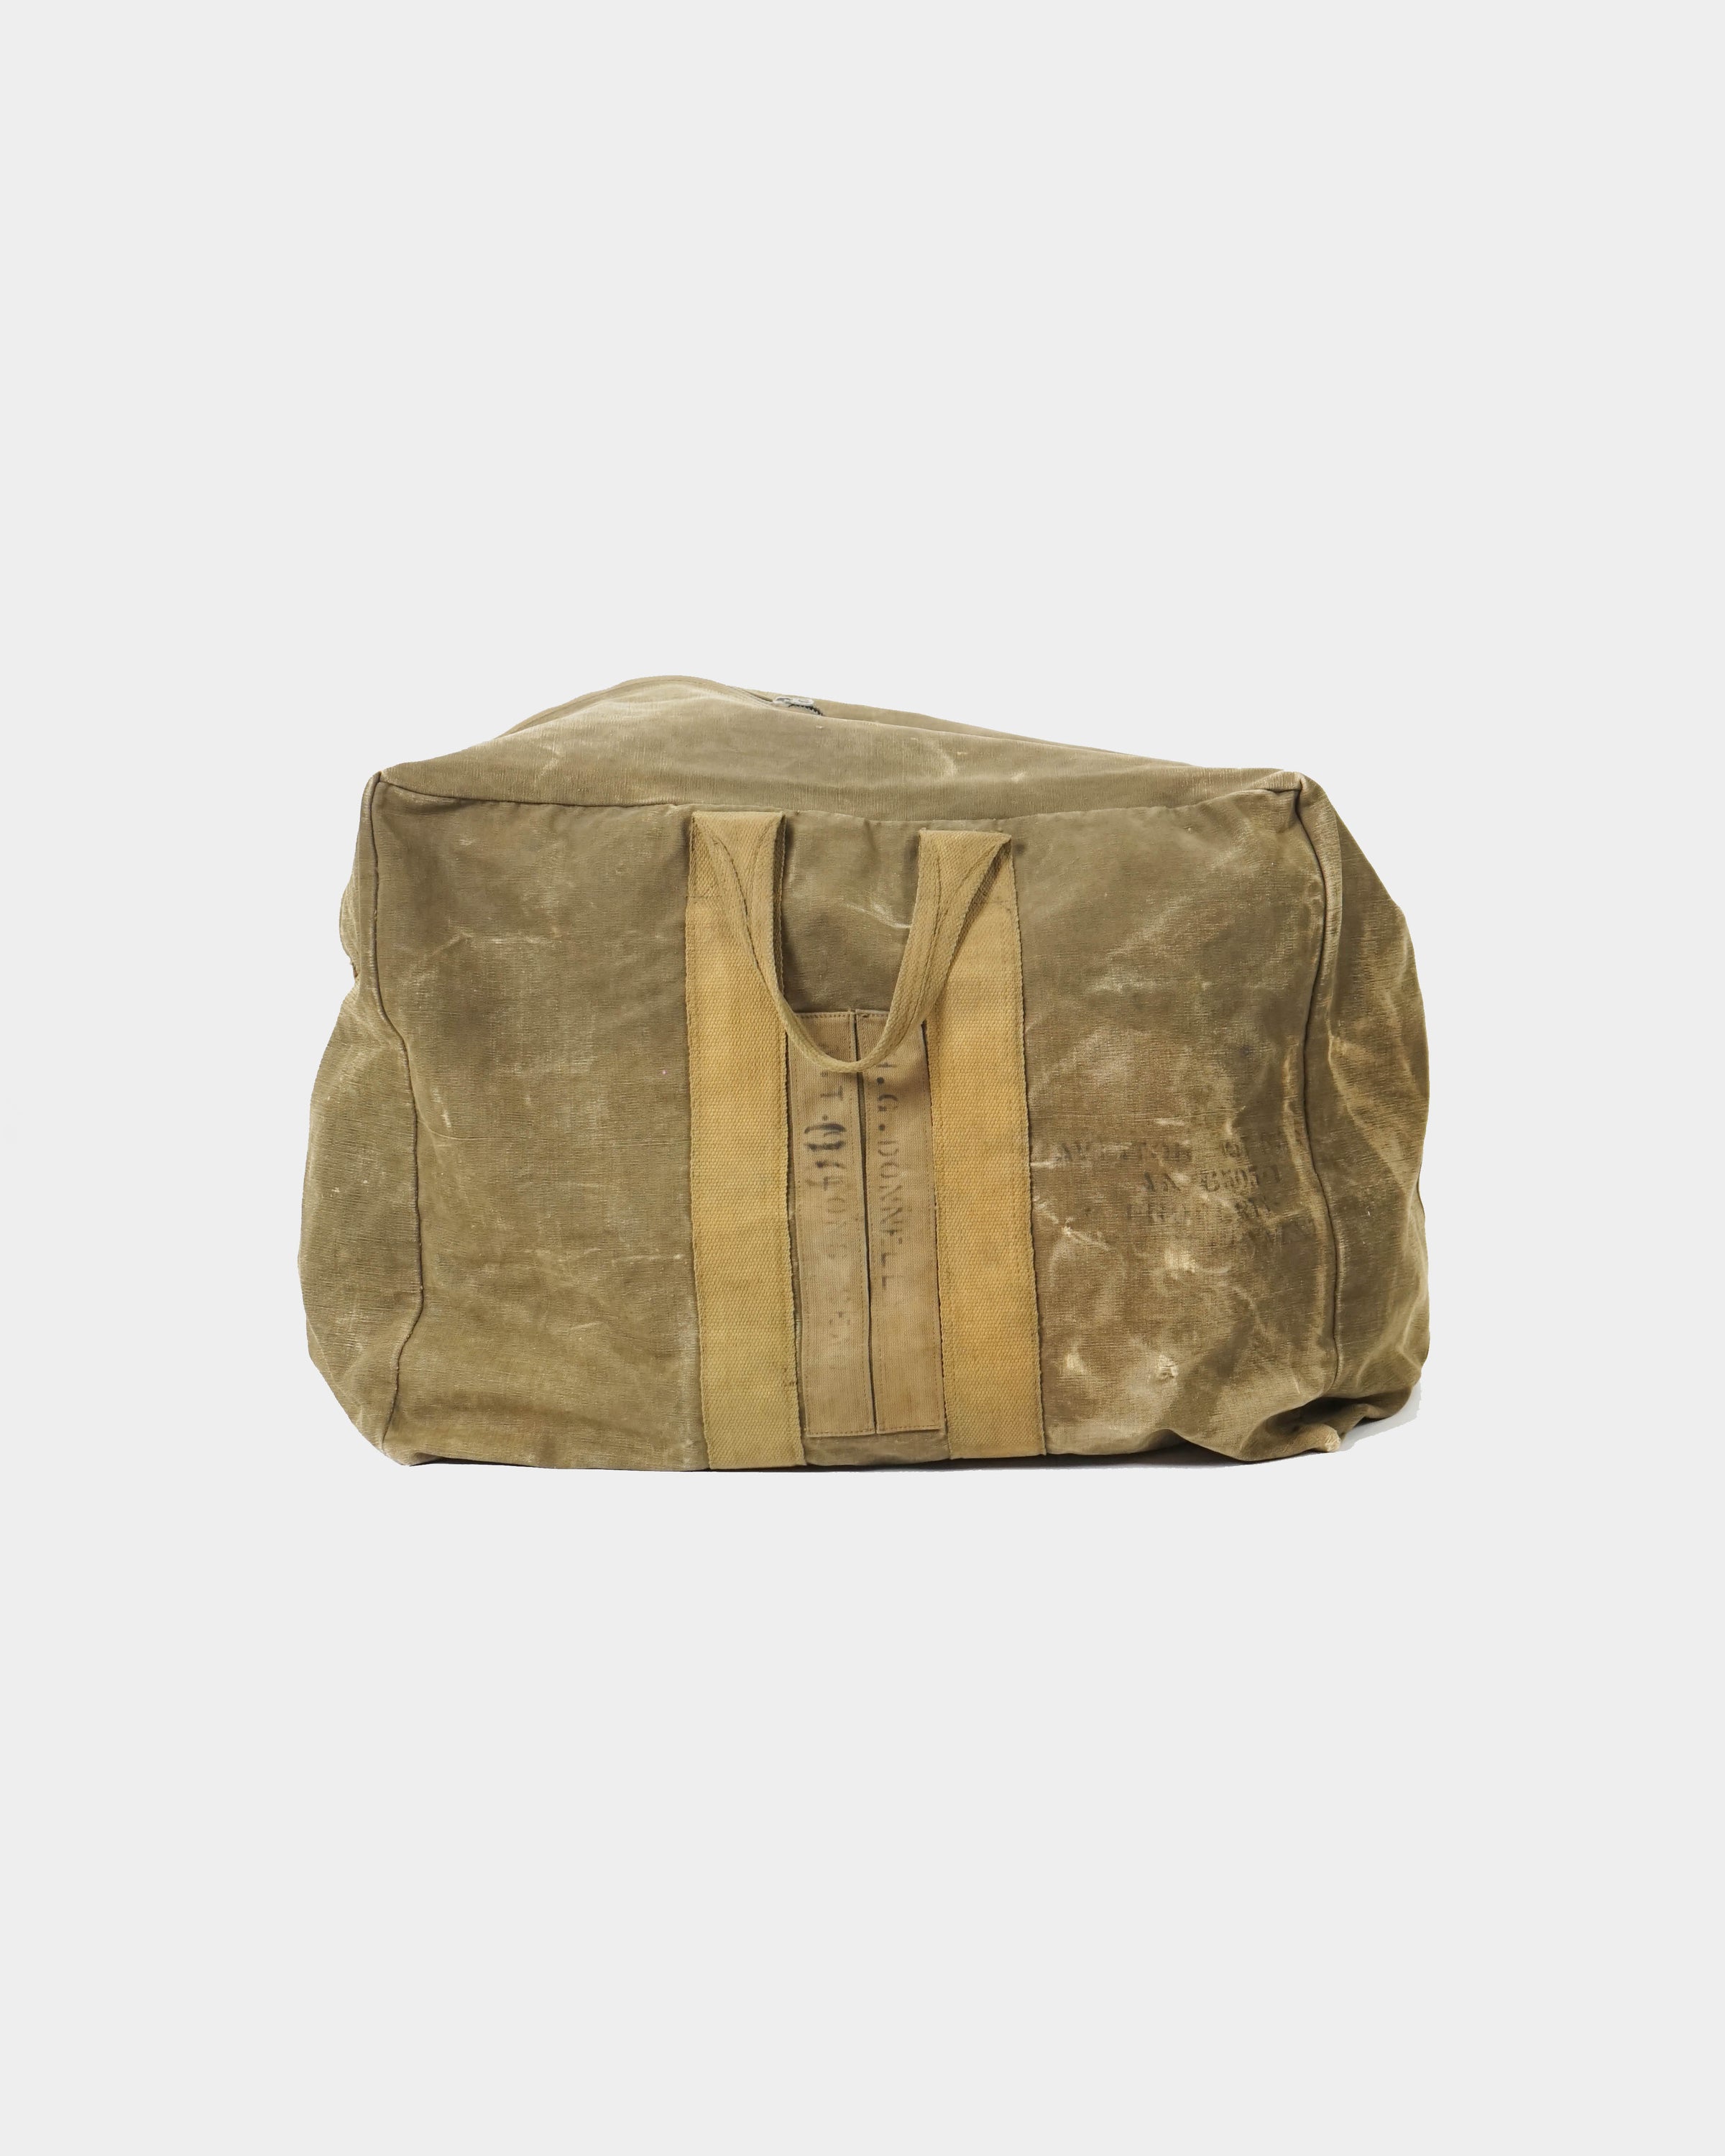 Aviator's Kit Bag